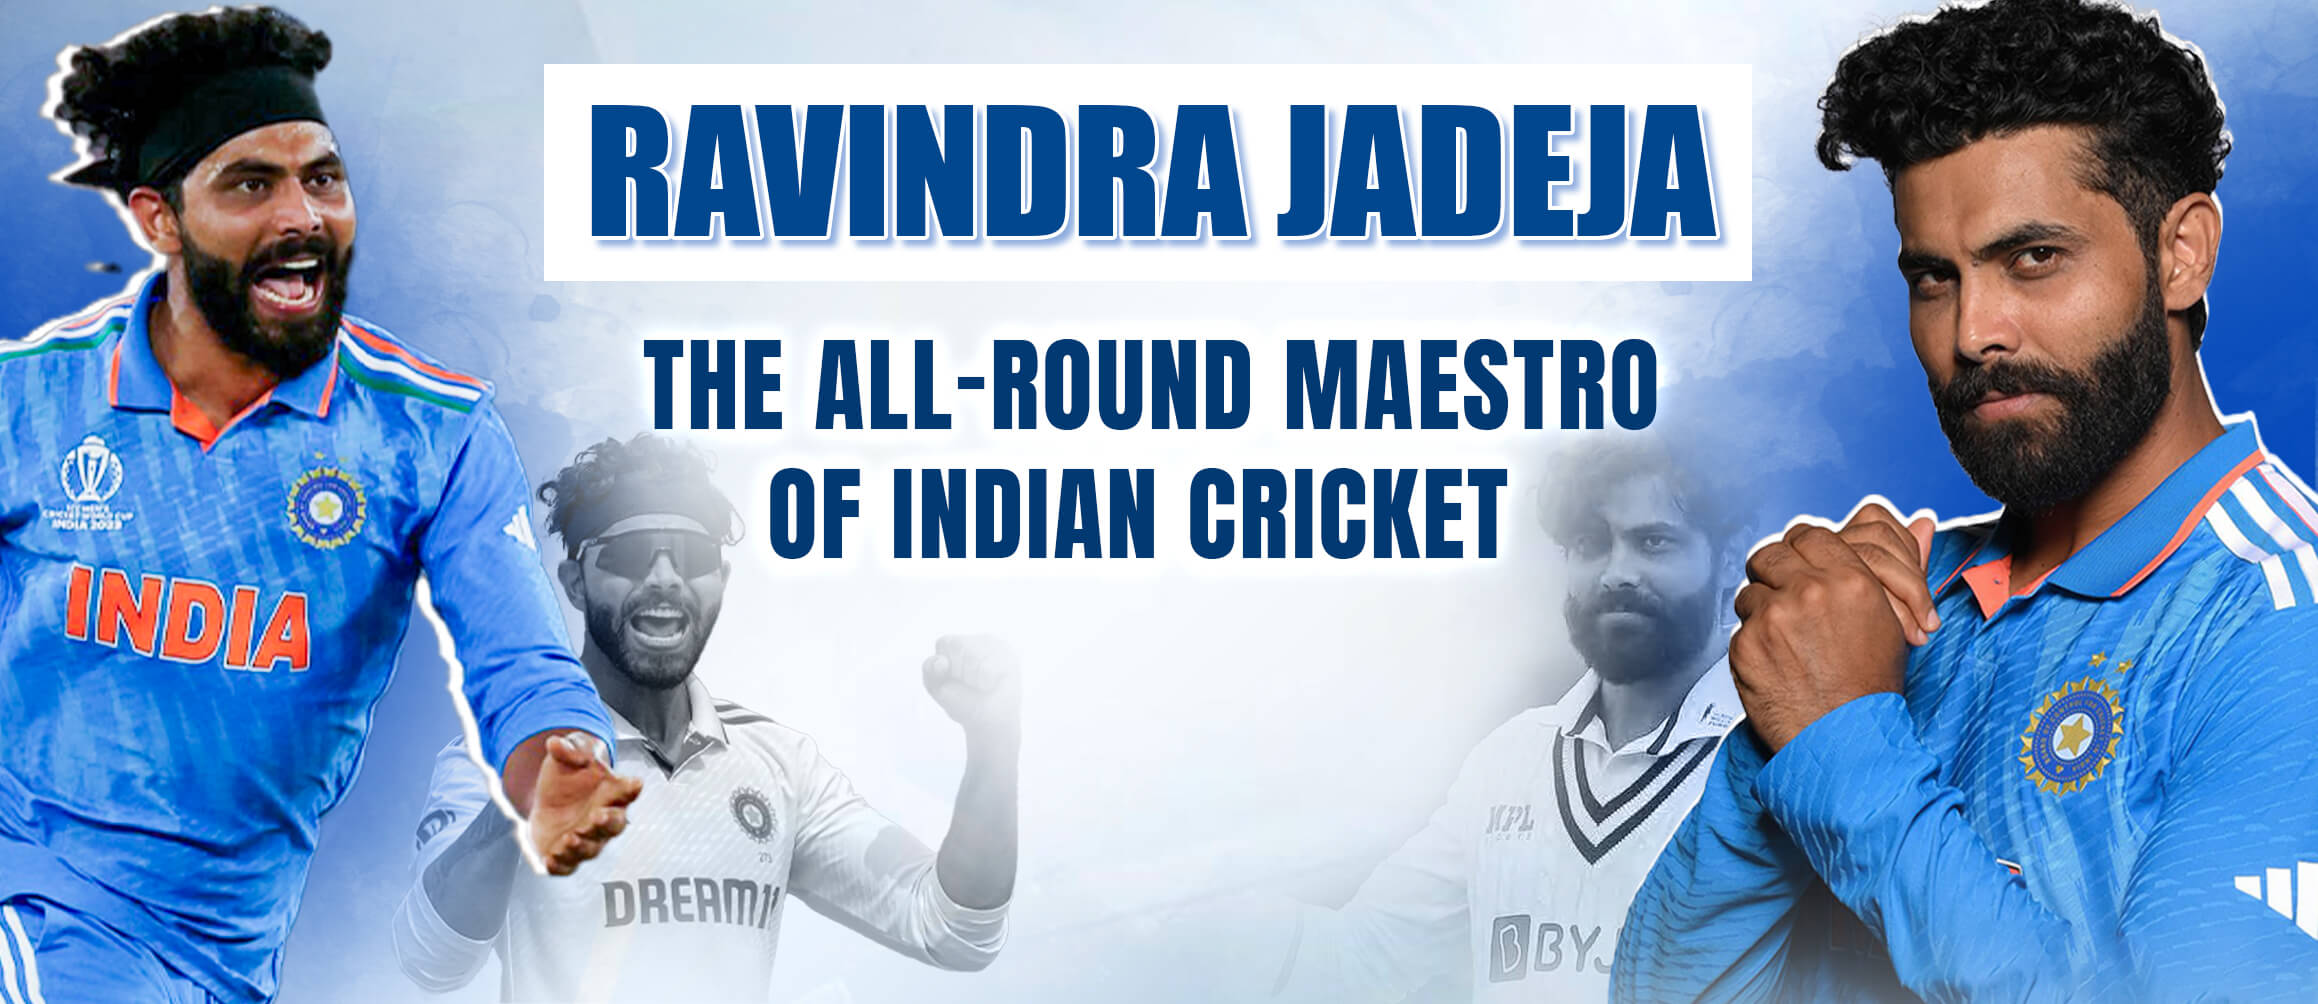 Ravindra Jadeja The All-Round Maestro of Indian Cricket